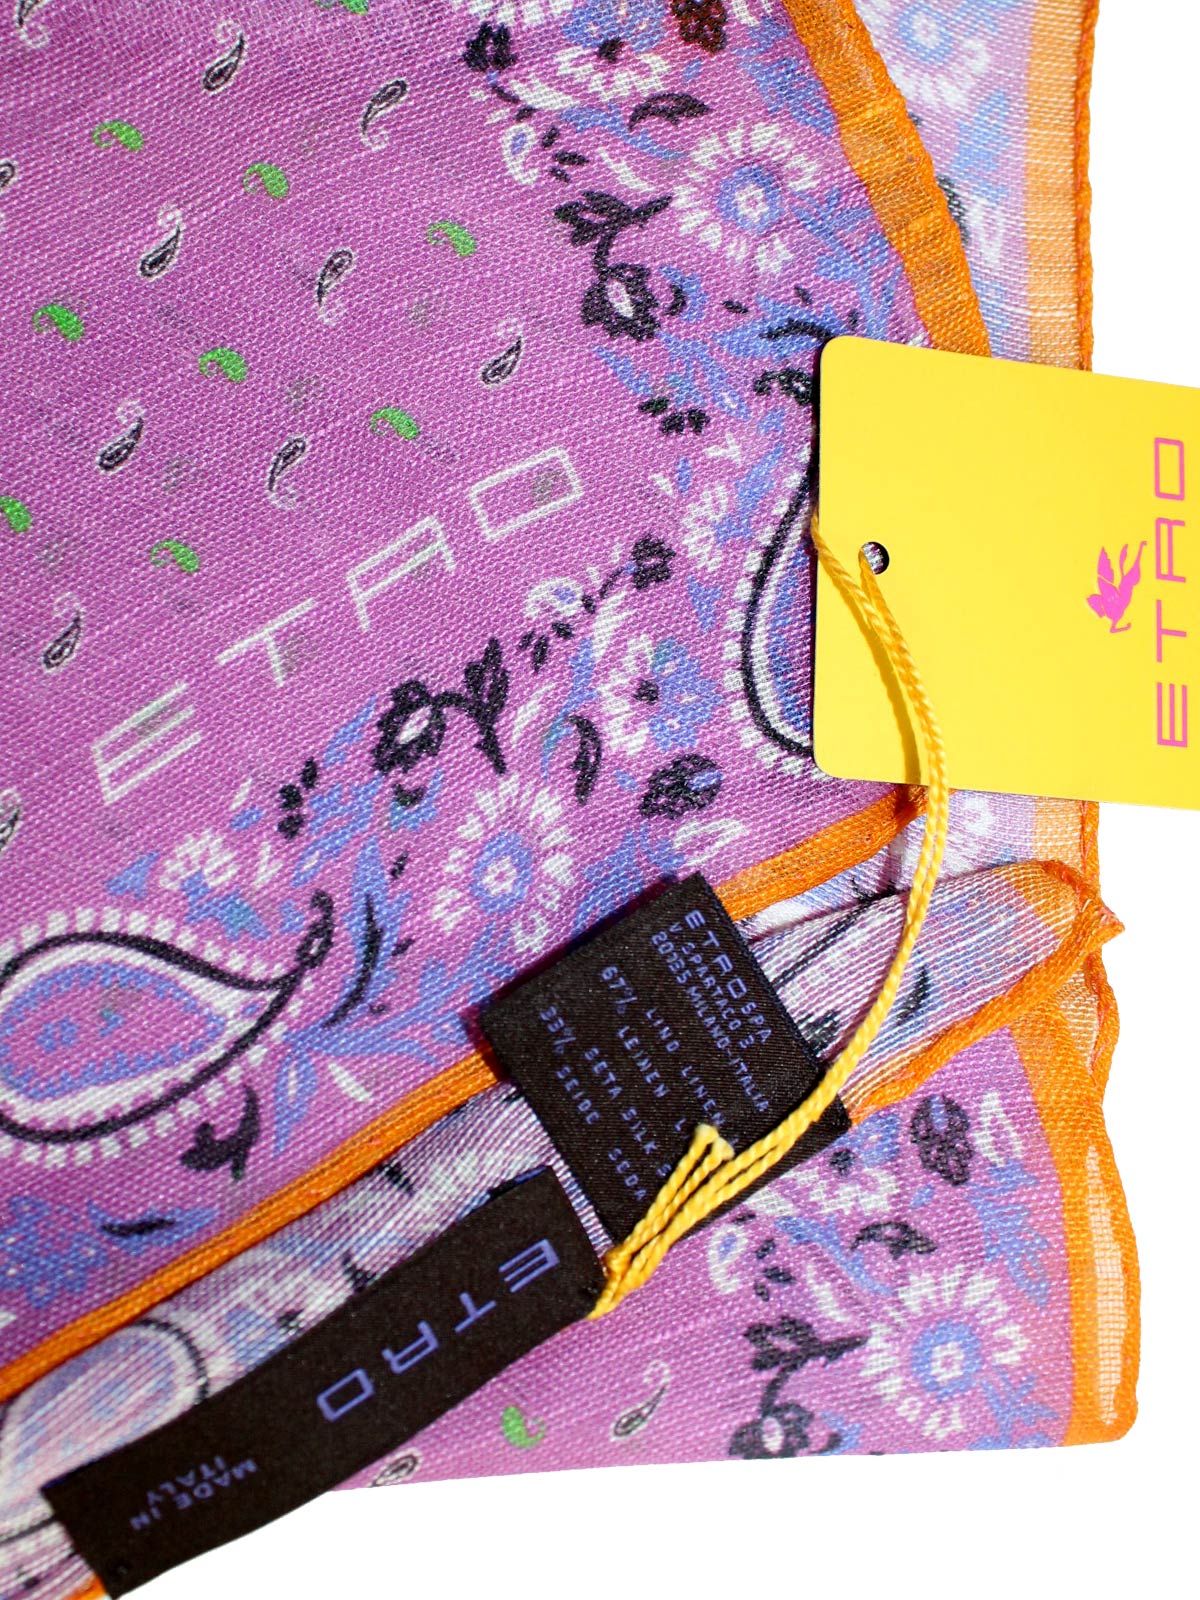 Etro Pocket Square Purple Paisley Linen Silk SALE